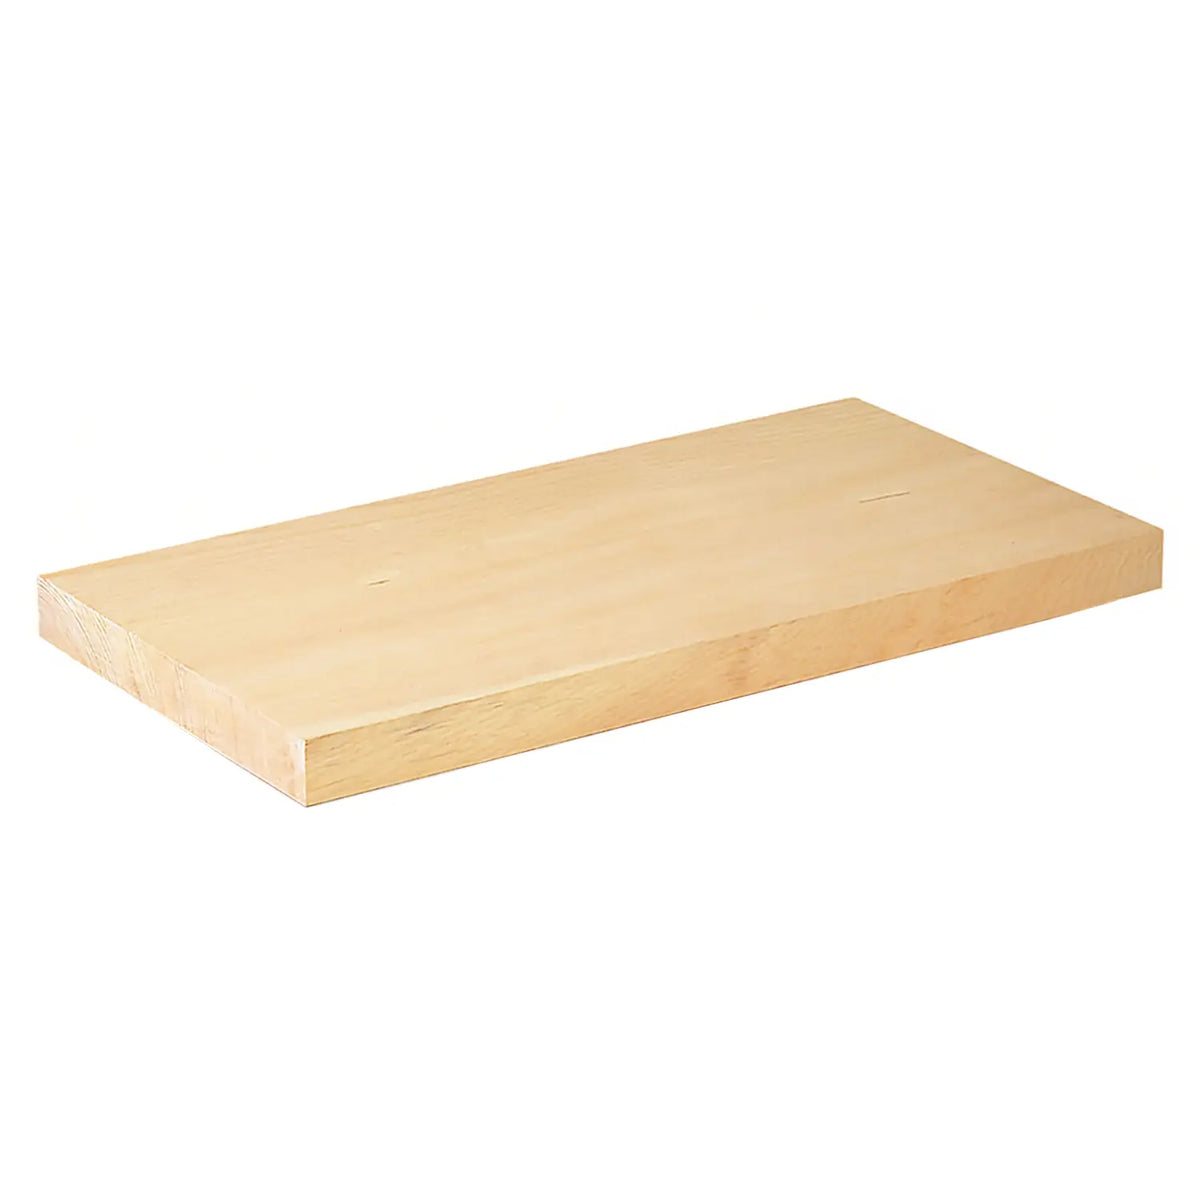 Yamacoh Single Piece Spruce Wooden Cutting Board